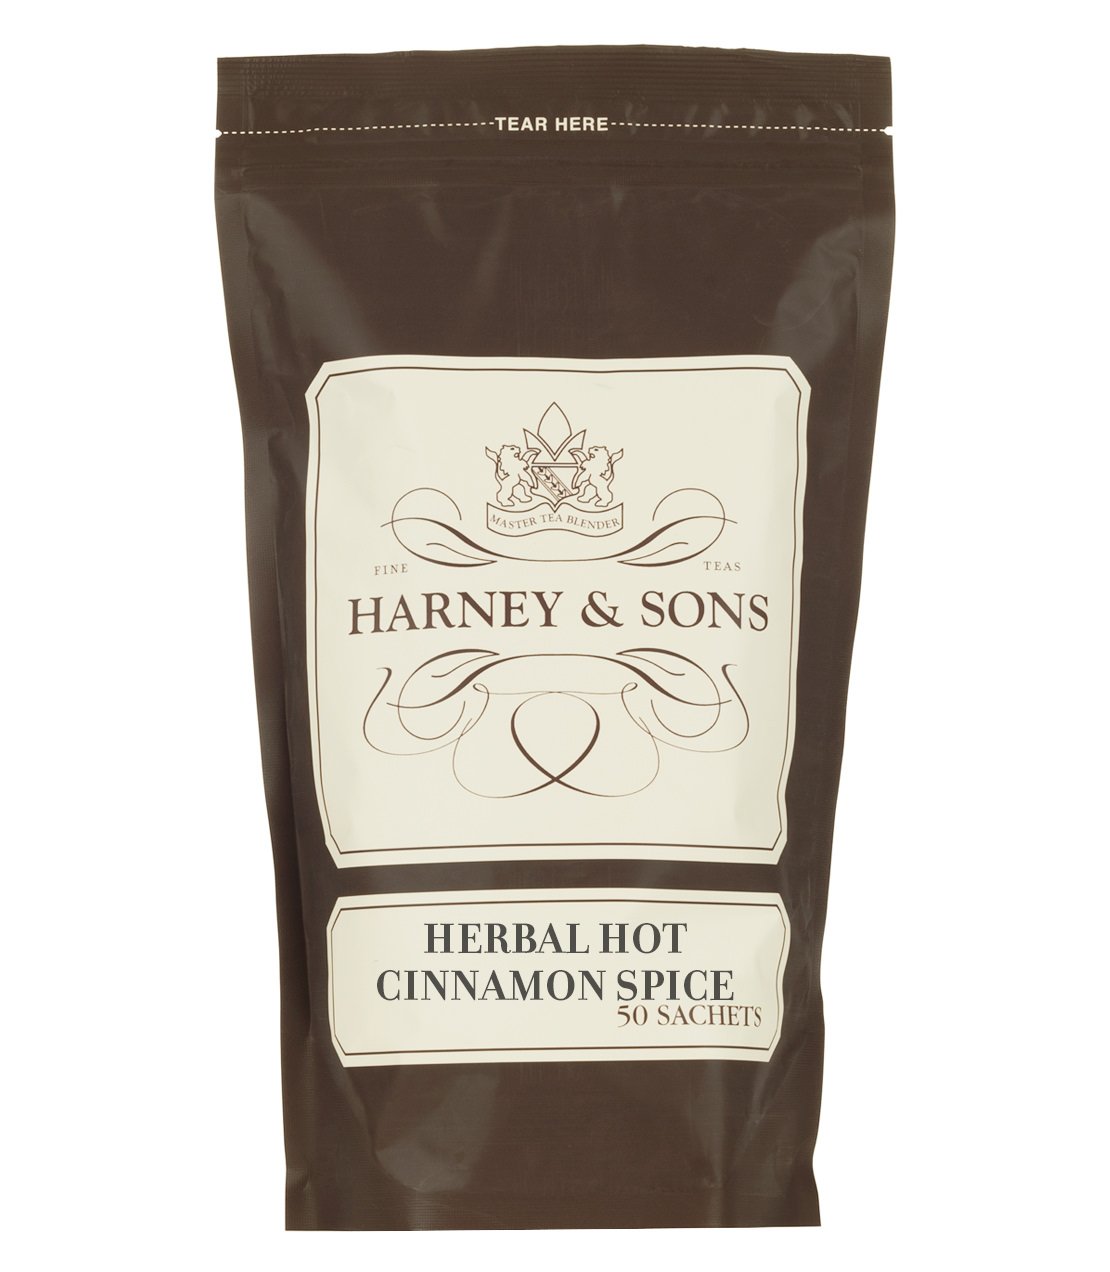 Cinnamon flavoured rooibos - Herbal Hot Cinnamon Spice, Bag of 50 Sachets - Harney & Sons Fine Teas Europe